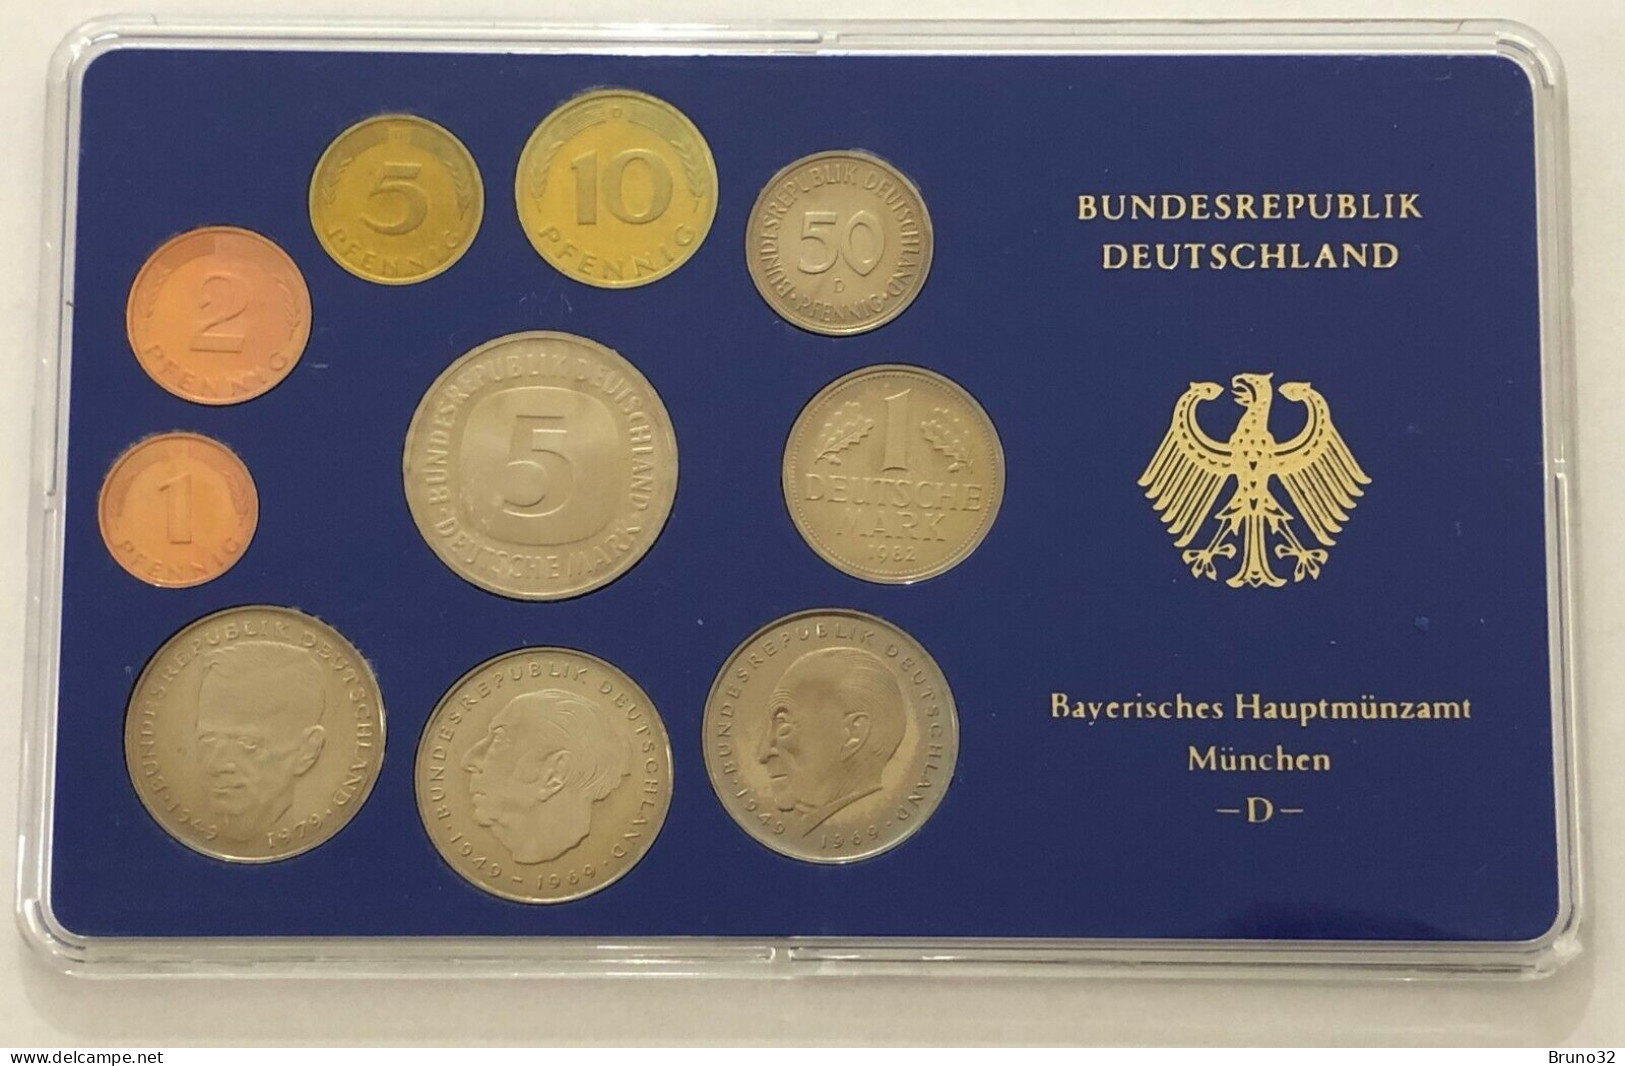 BRD - GERMANIA FEDERALE - 1982 D PROOF - Set Di Monete Divisionali - Mint Sets & Proof Sets